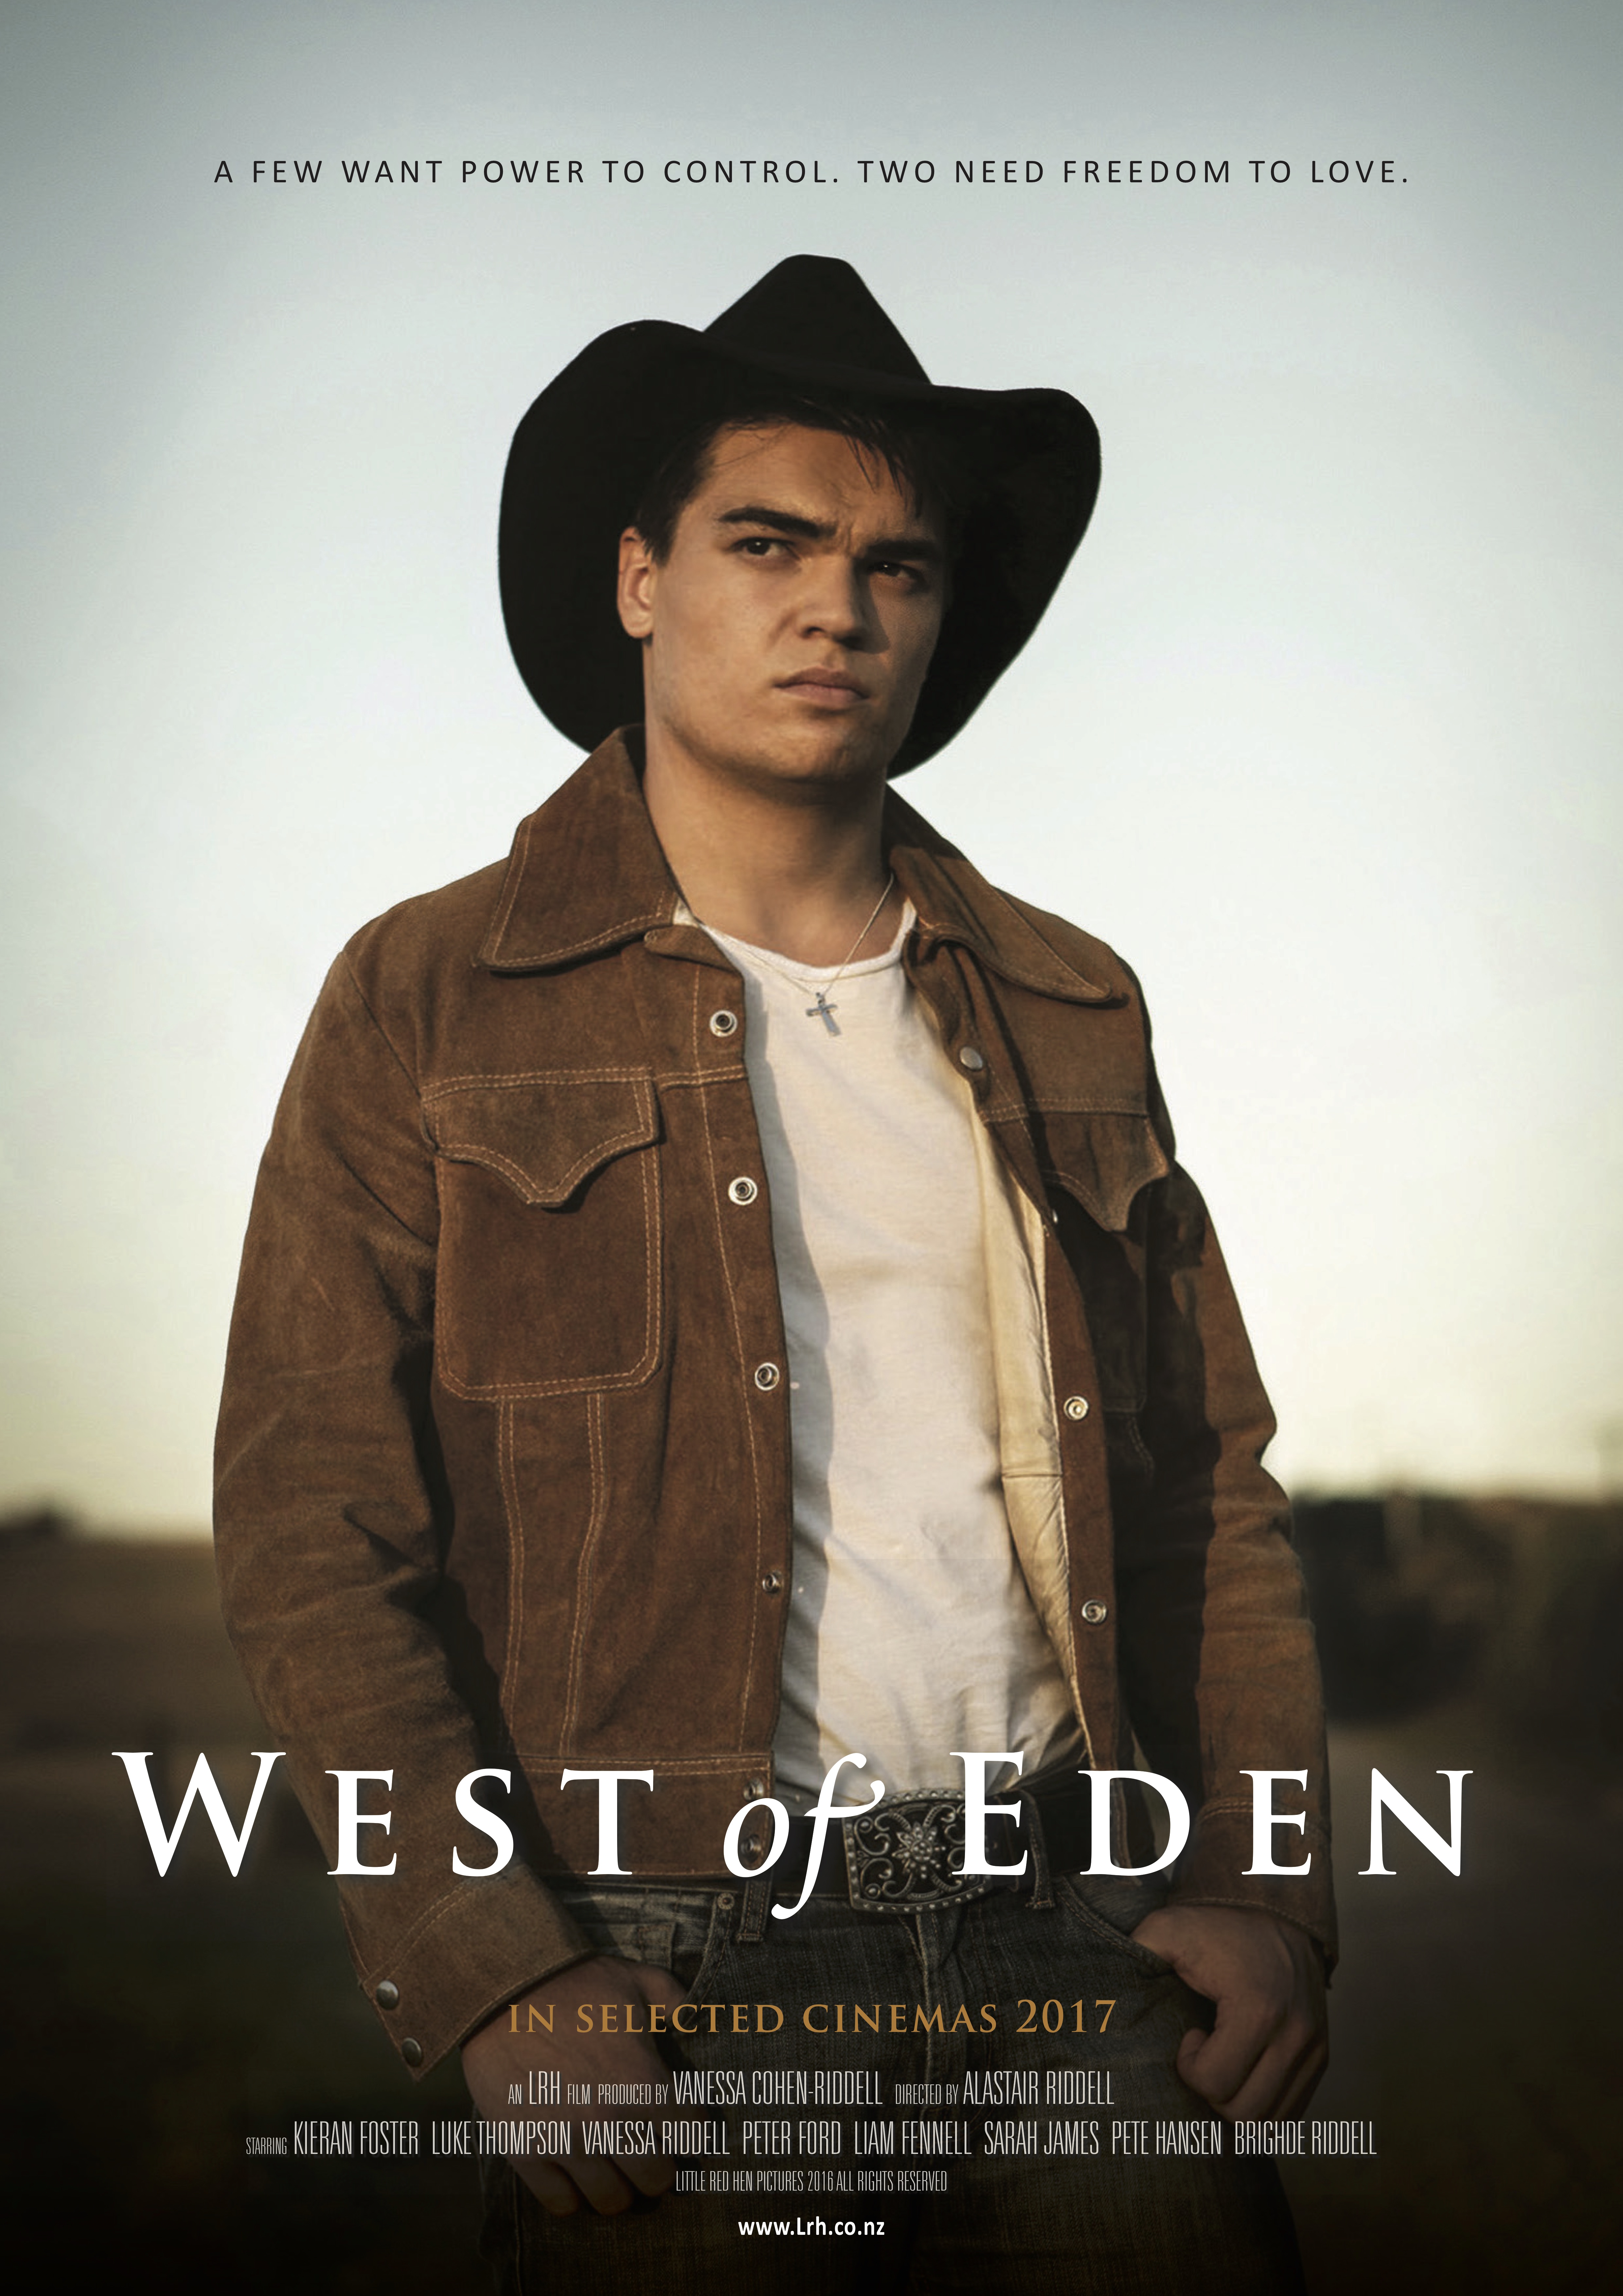 Nonton film West of Eden layarkaca21 indoxx1 ganool online streaming terbaru